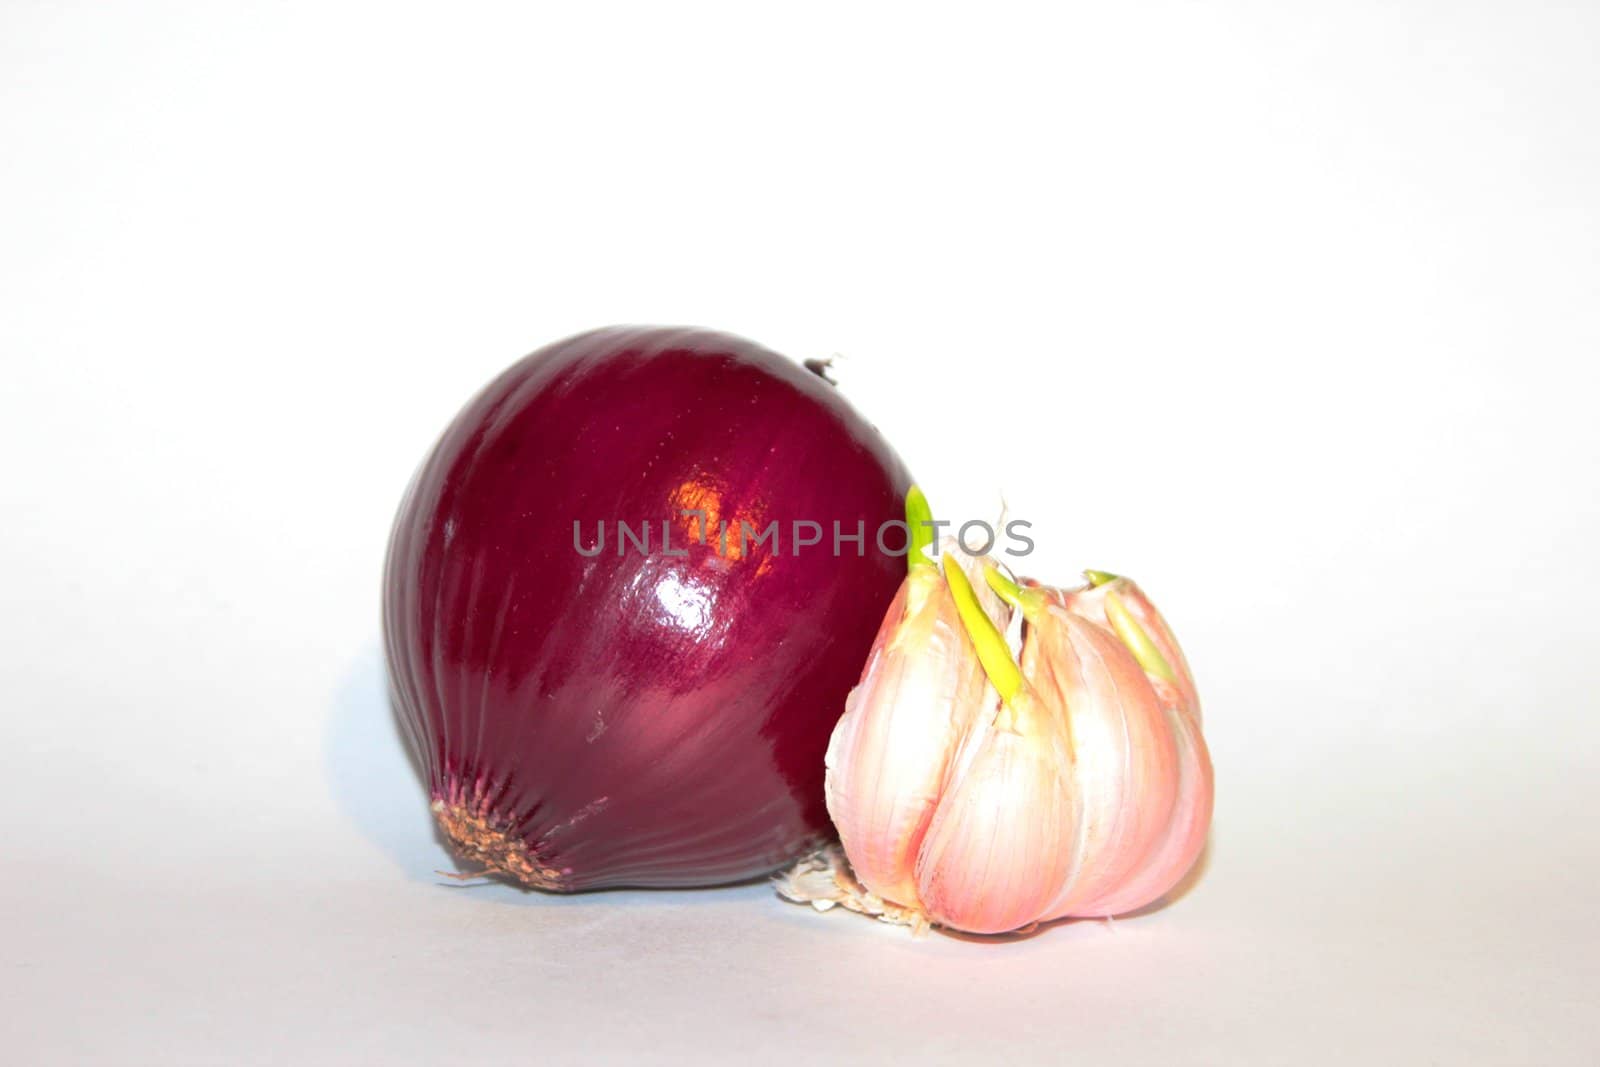 Onion and garlic. by Metanna